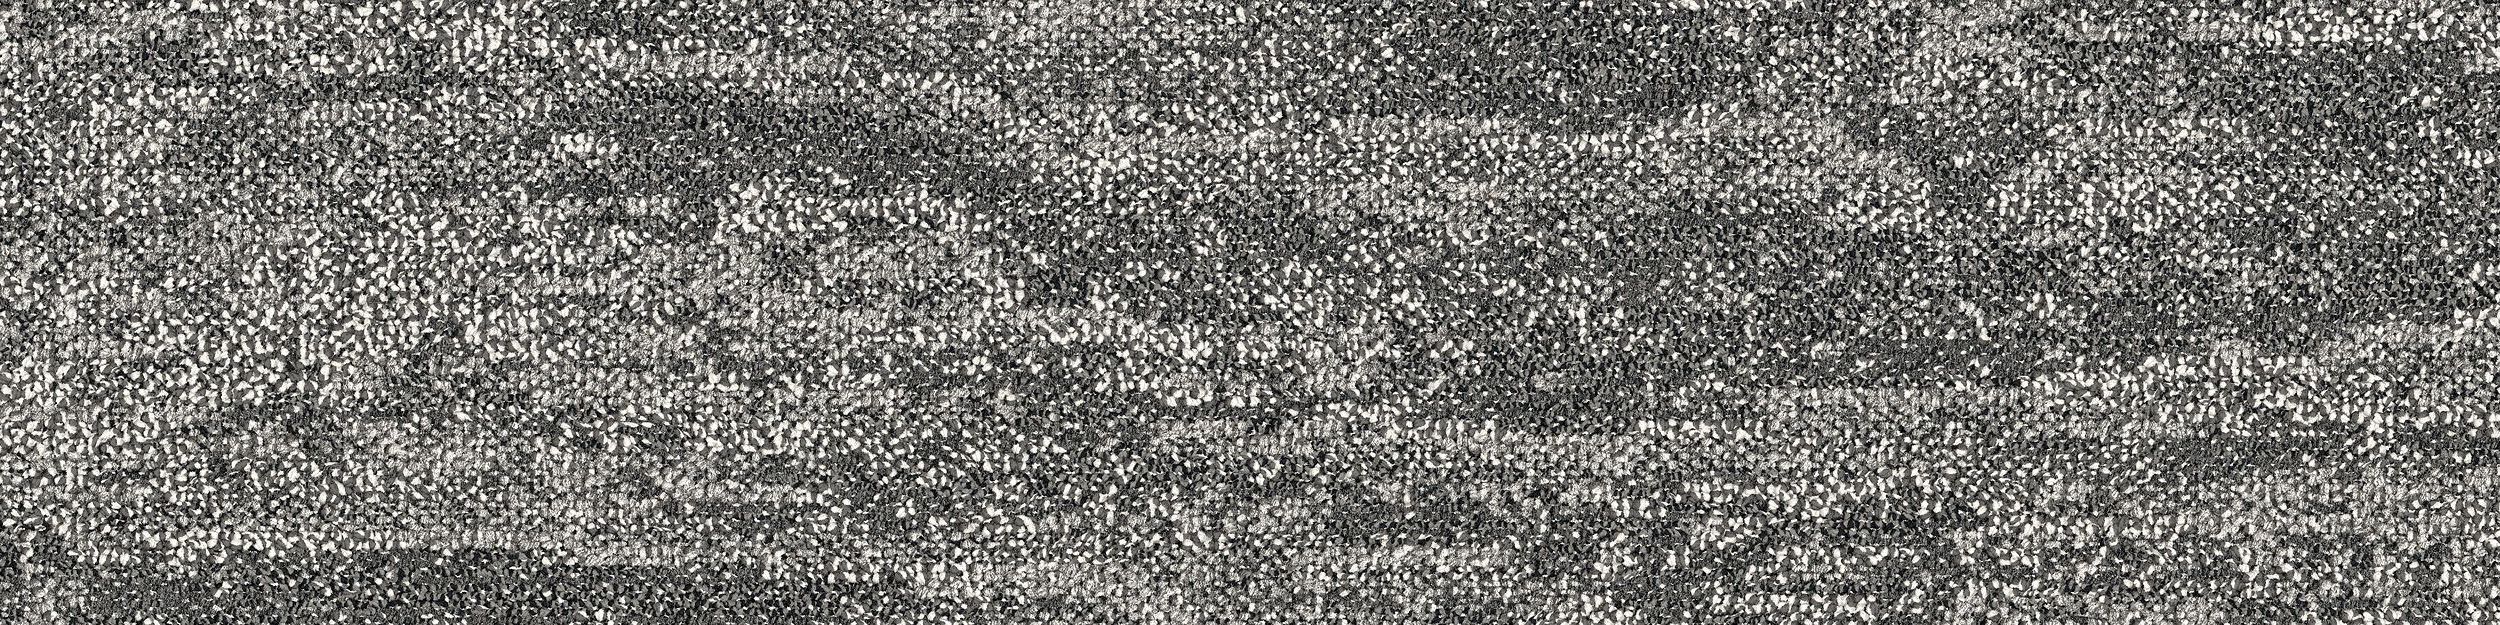 Rock Springs Carpet Tile In Nickel Gneiss imagen número 2